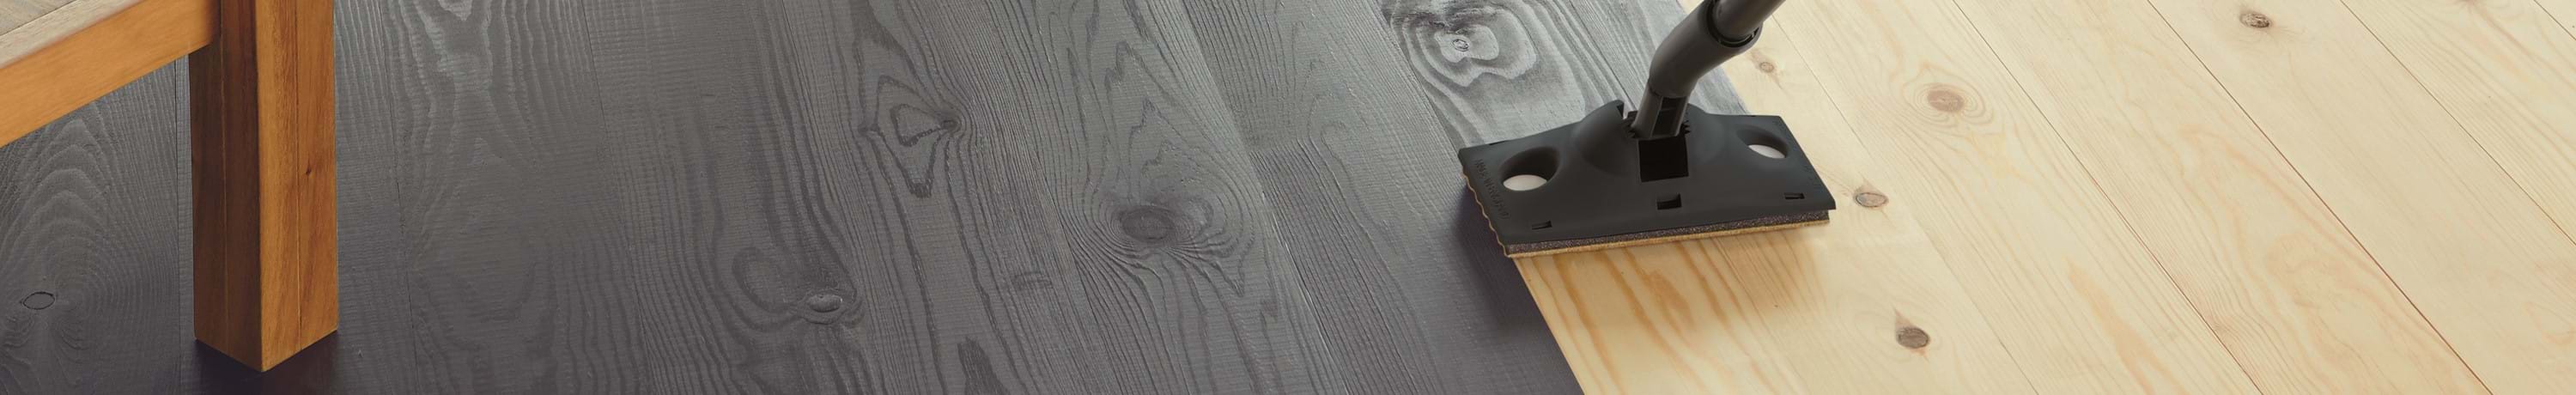 wood floor paint category.jpg